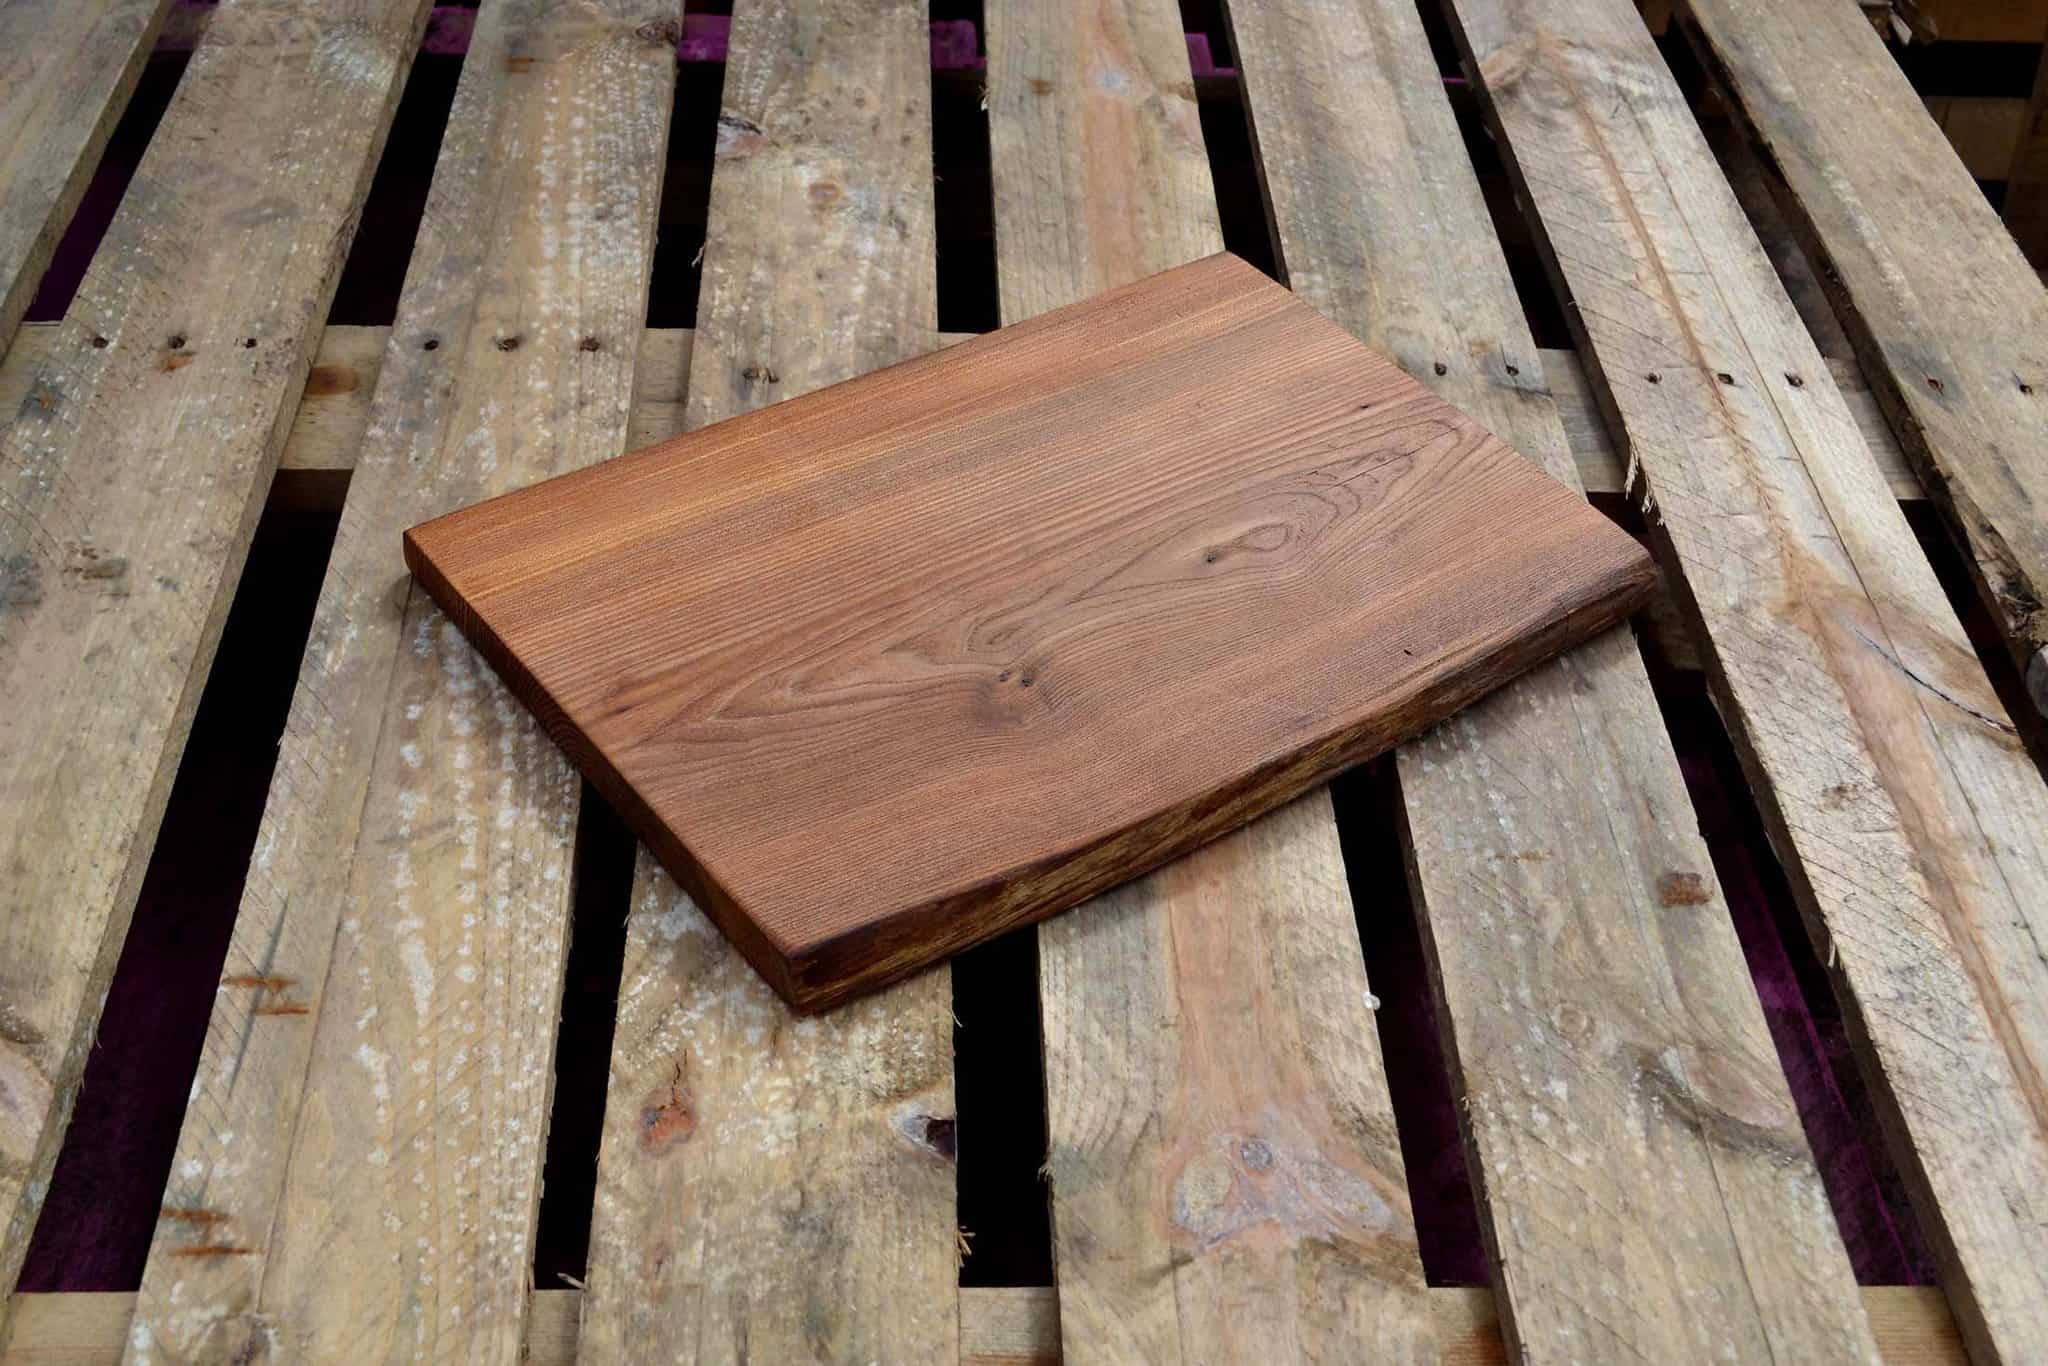 Hardwood Chopping Board